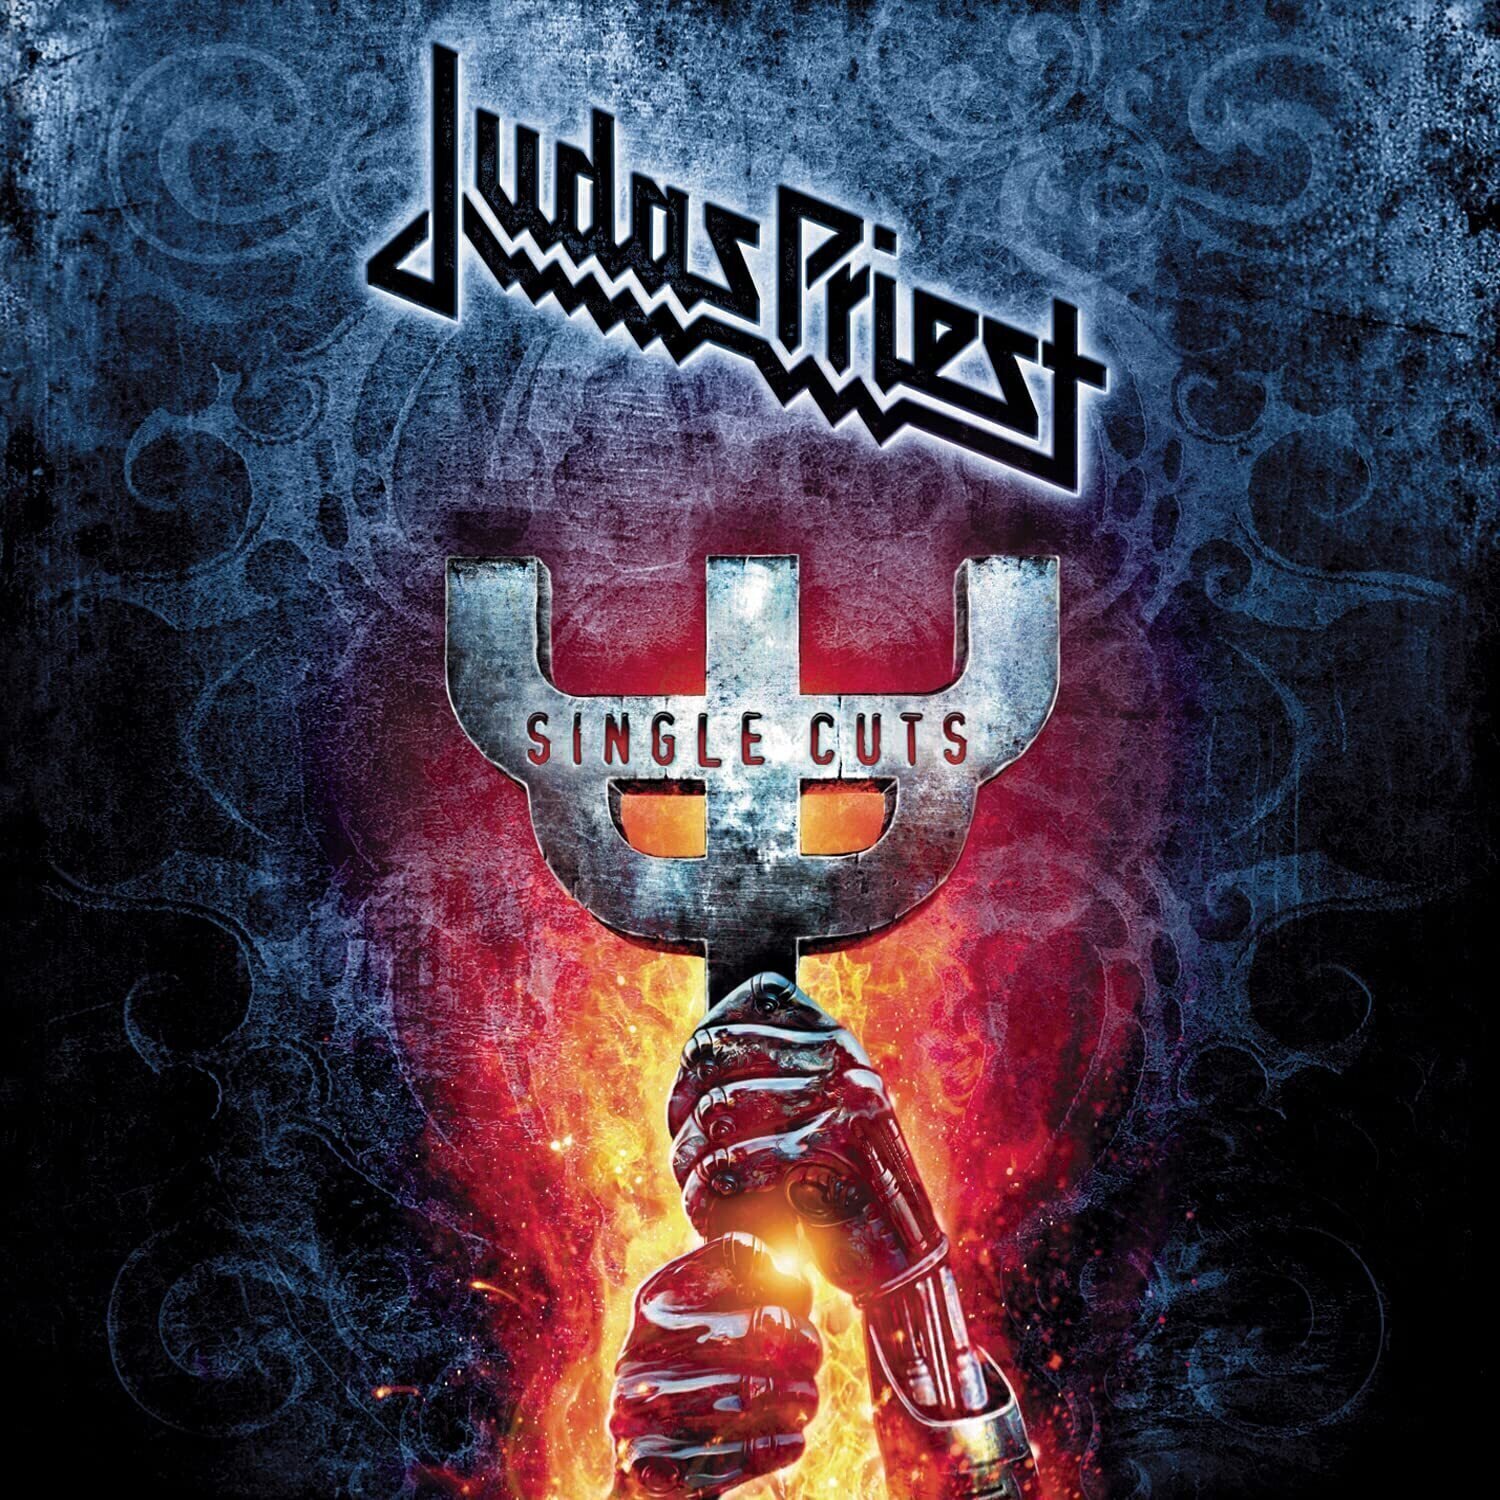 CD musique Judas Priest - Single Cuts (CD)